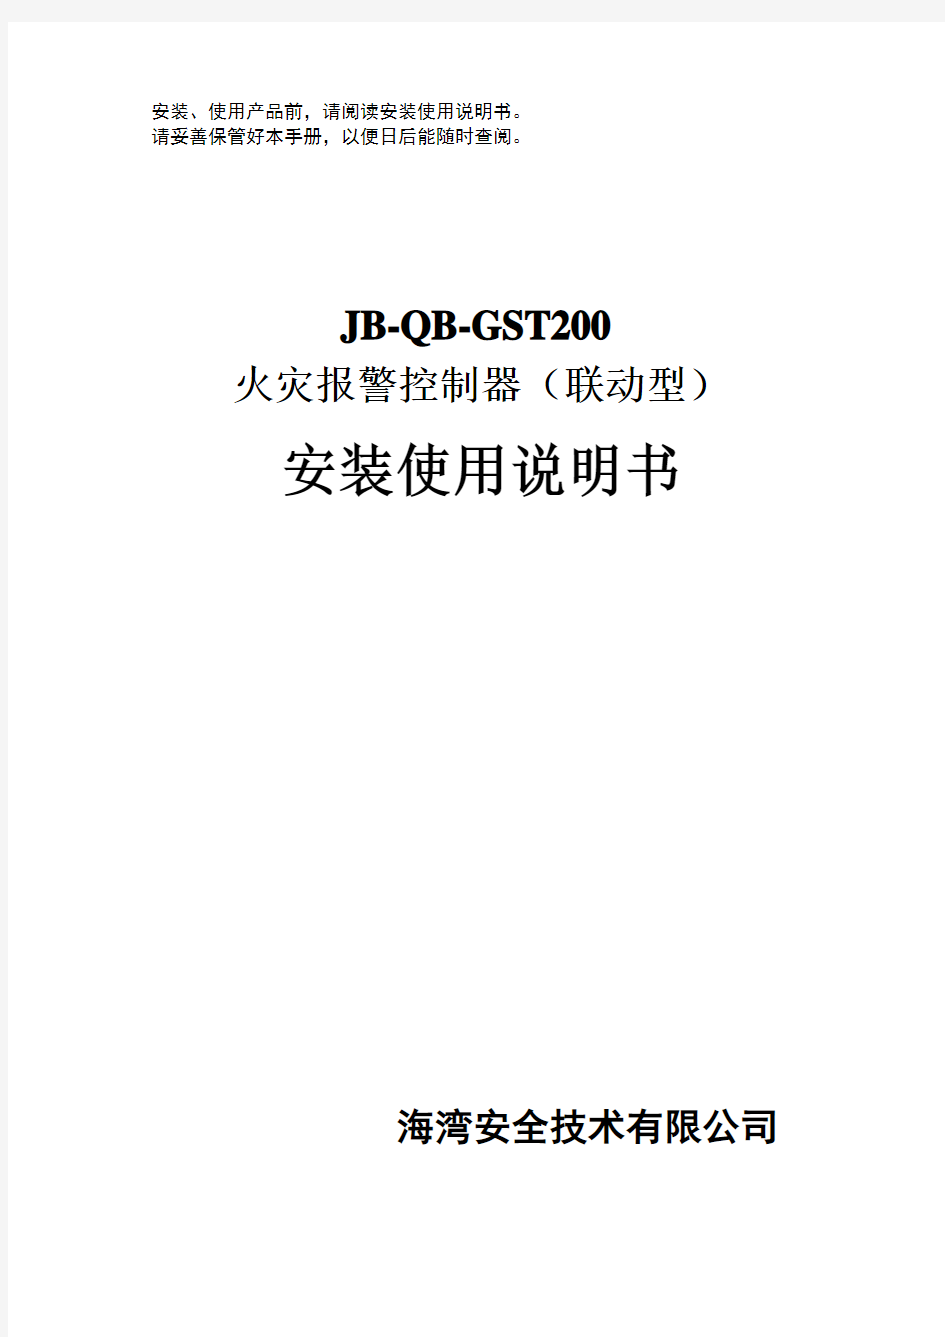 JB-QB-GST200火灾报警控制器安装使用说明书